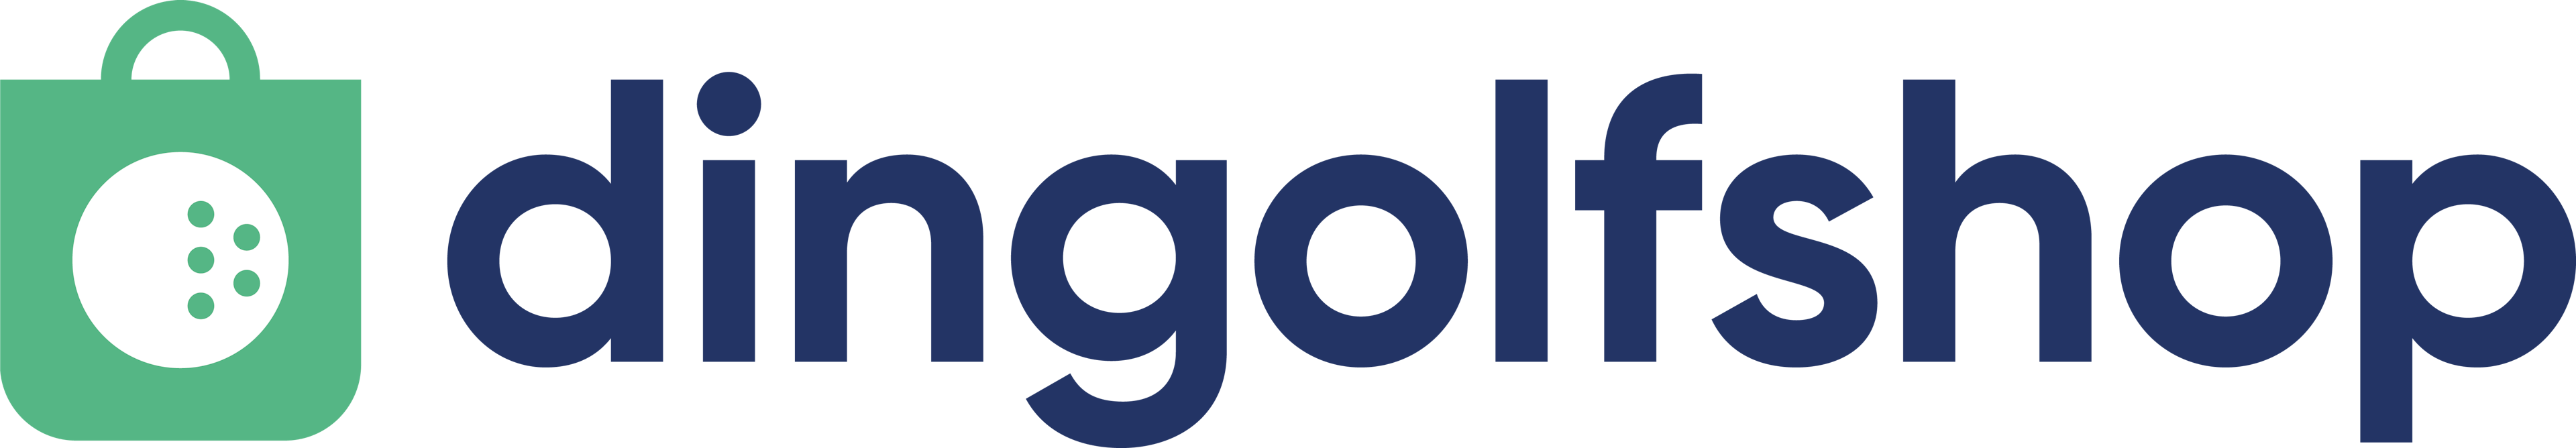 dingolfshop-logo